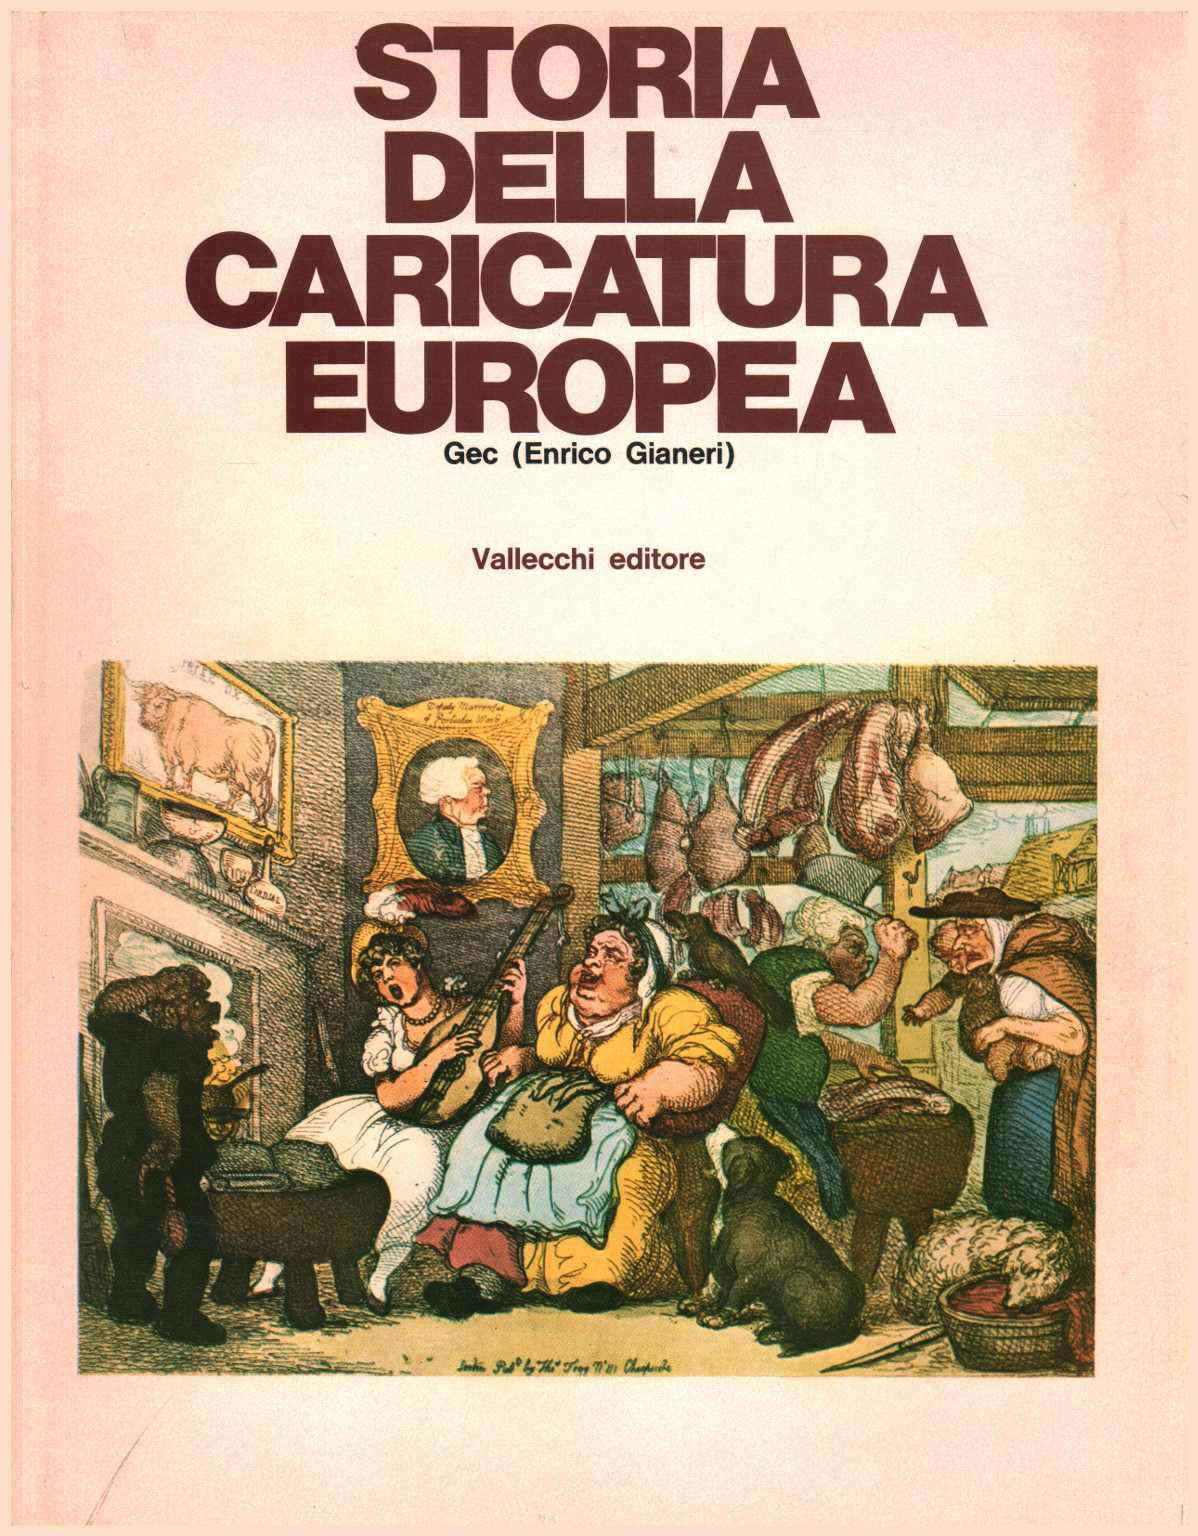 Historia de la caricatura europea